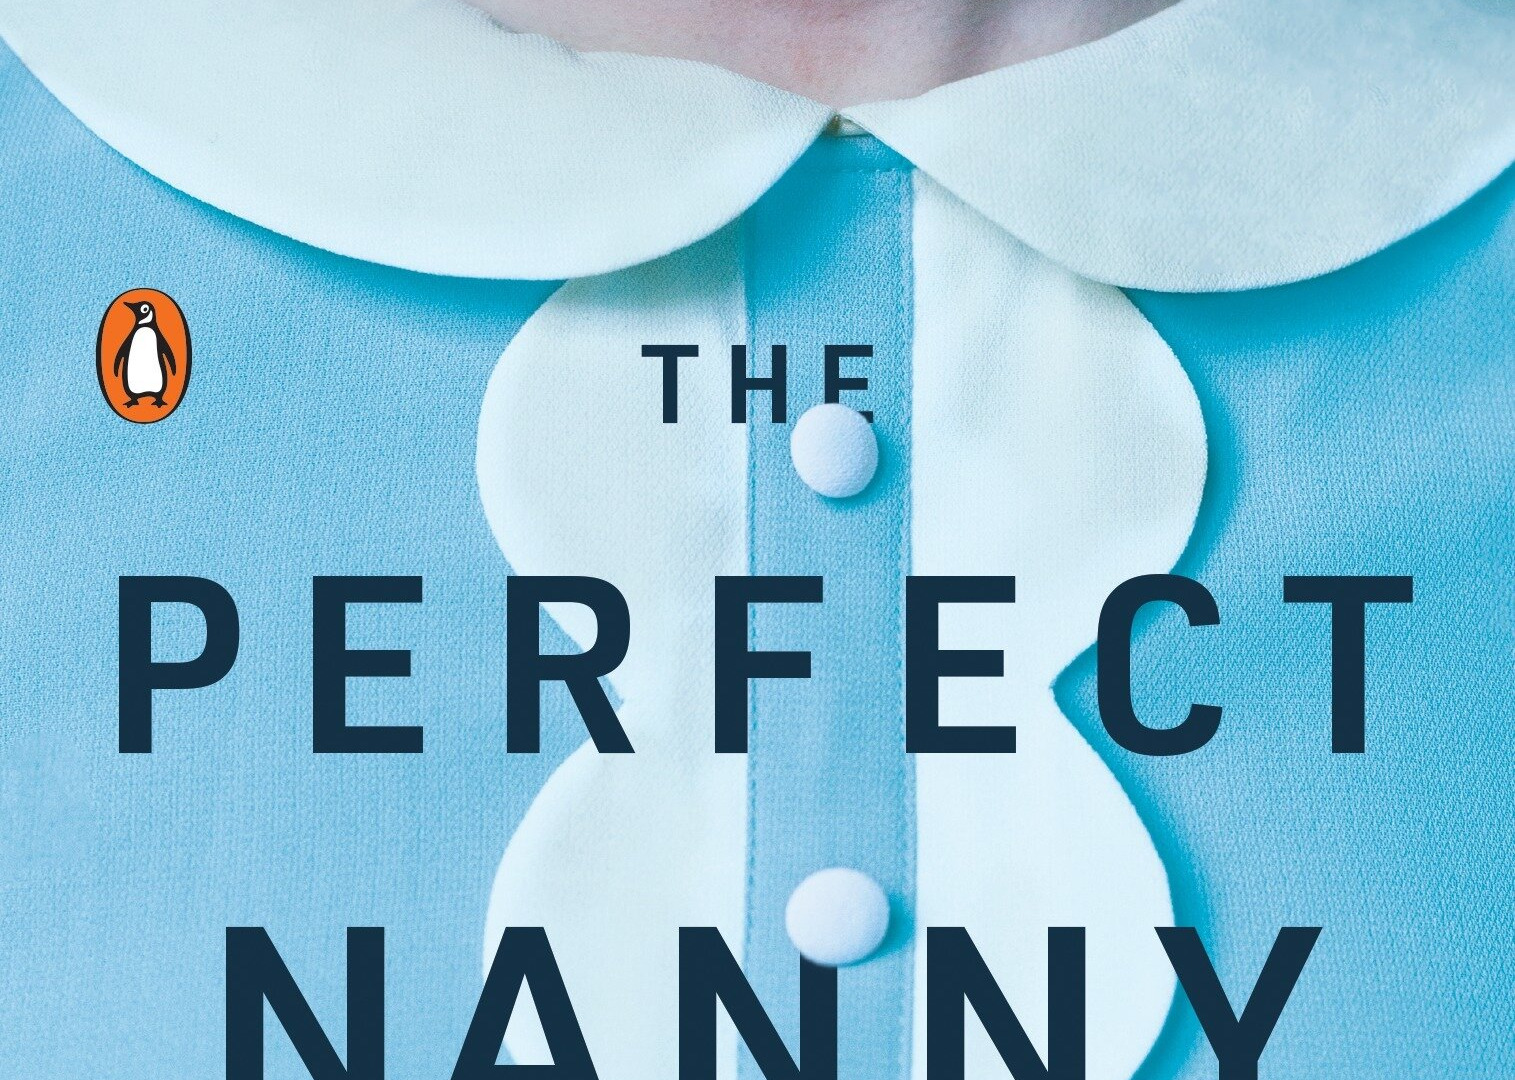 Show The Perfect Nanny